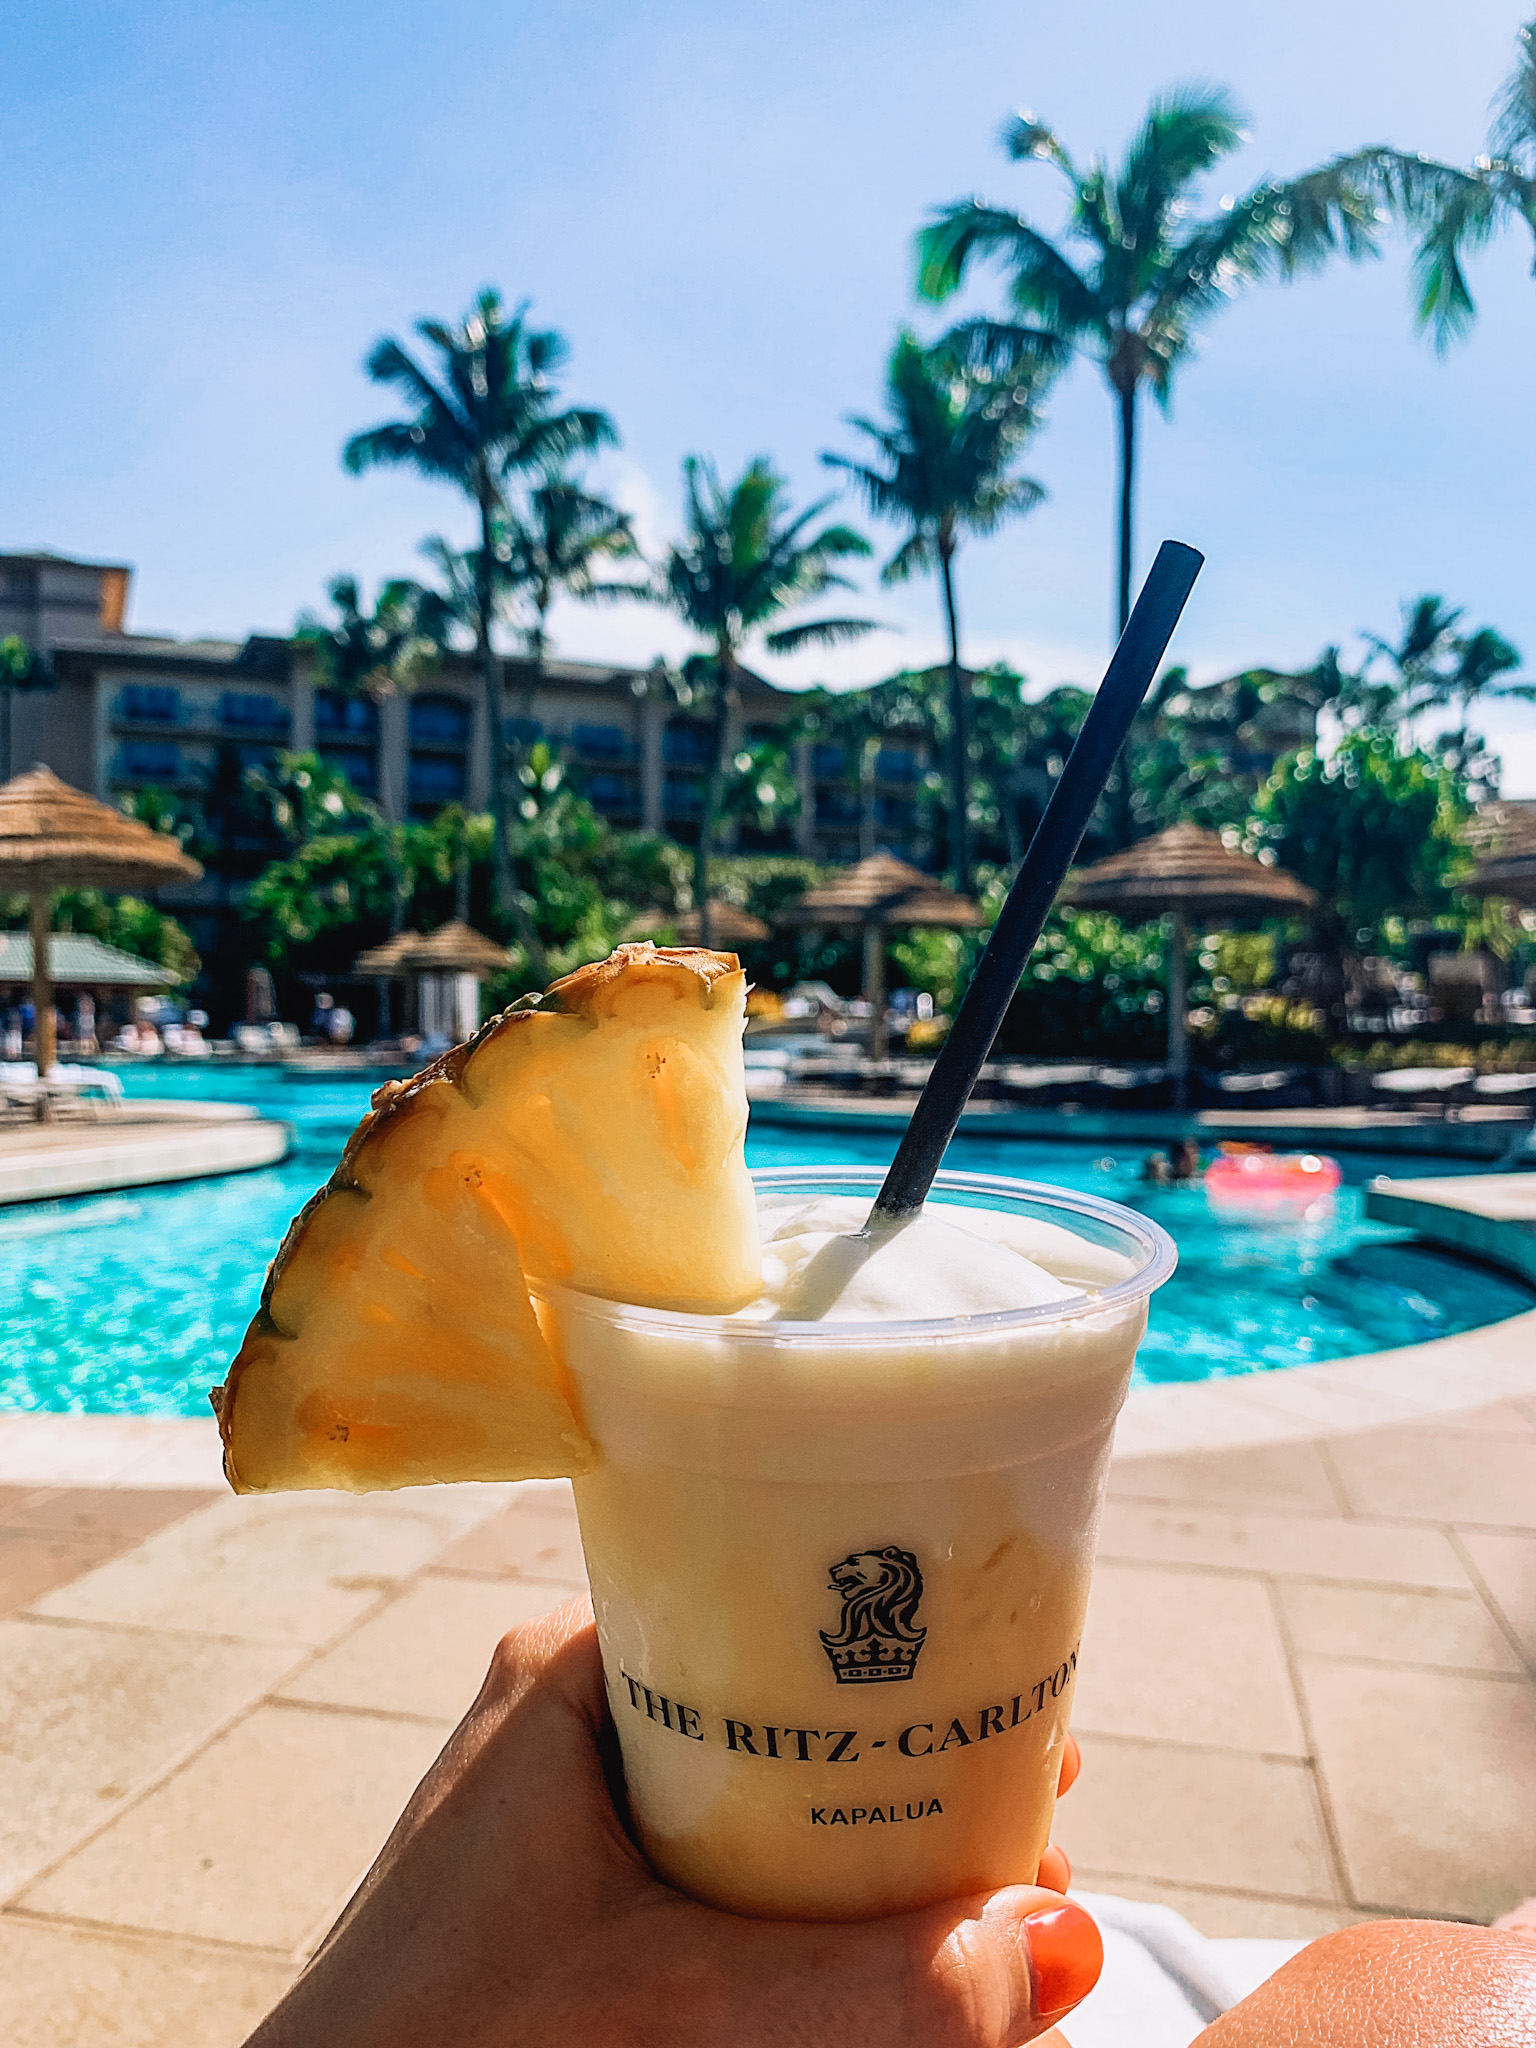 The Ritz-Carlton Kapalua Pineapple drink